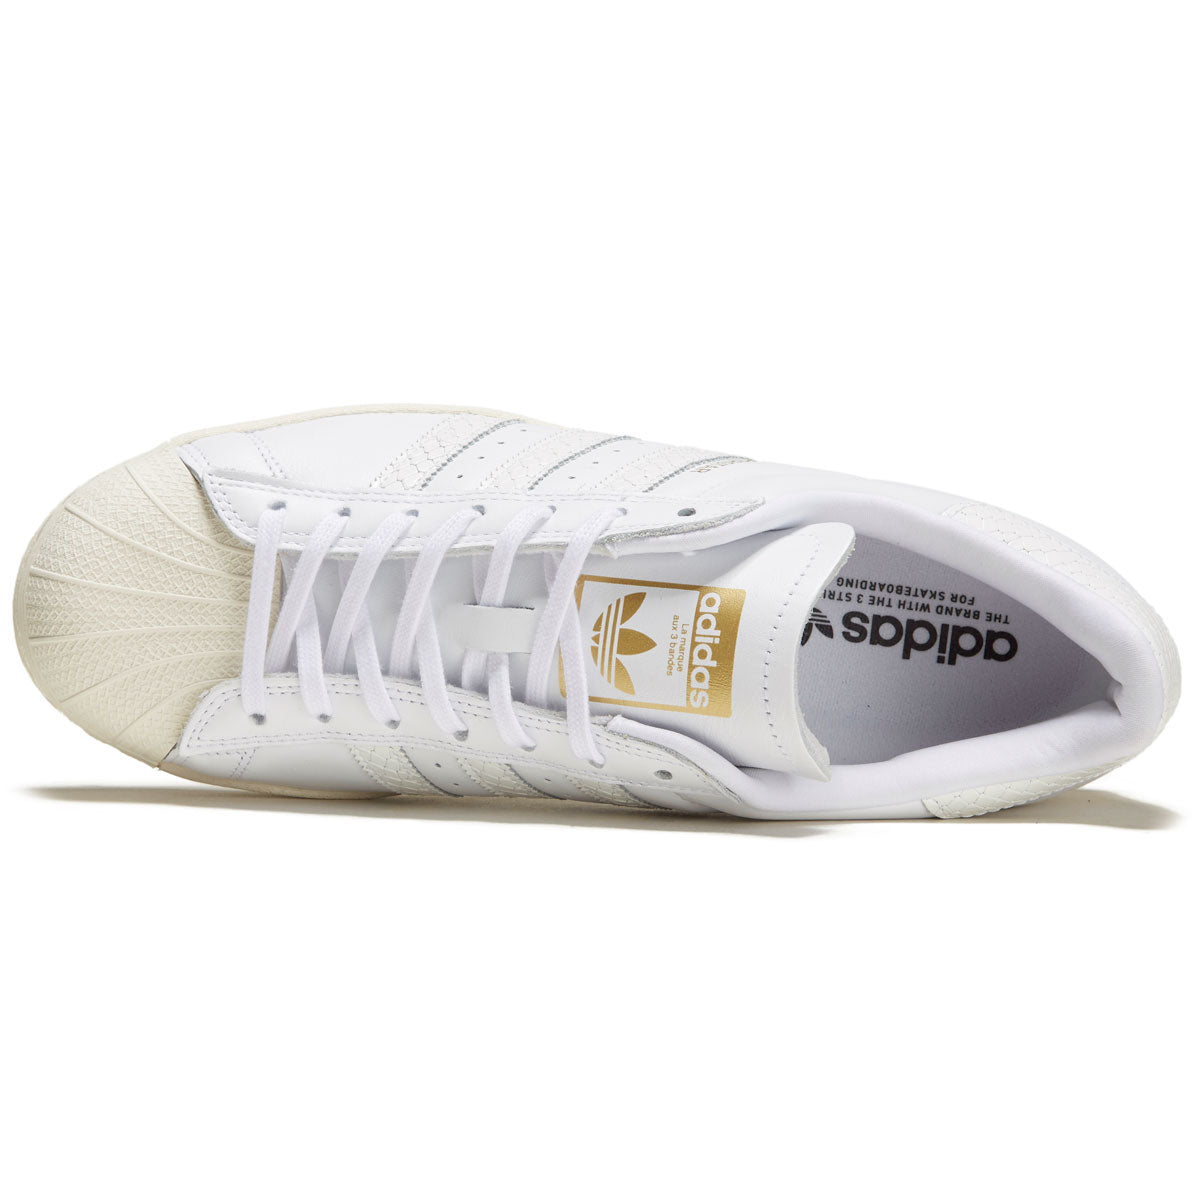 Adidas Superstar ADV - White Gold